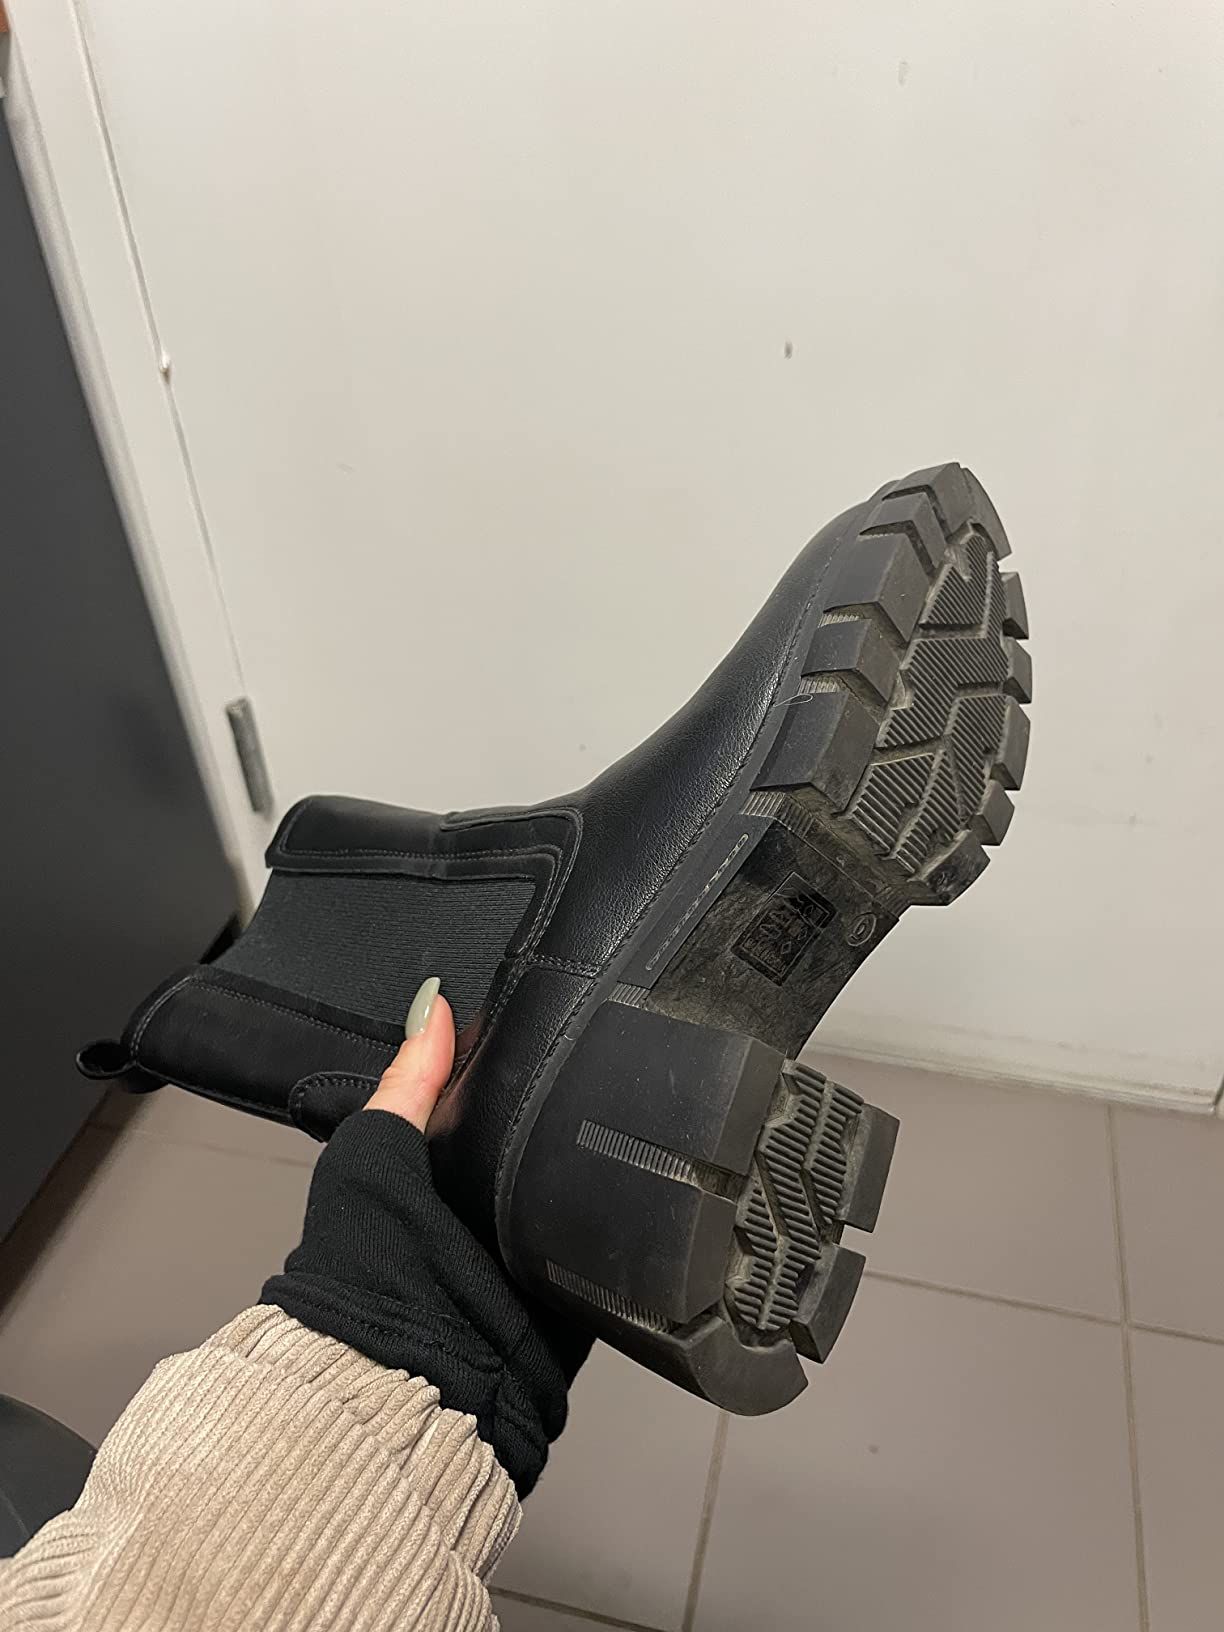 TINSTREE Women's Lug Sole Platform Boots Mid Calf Elastic Chunky Block Heel Leather Chelsea Booti... | Amazon (US)